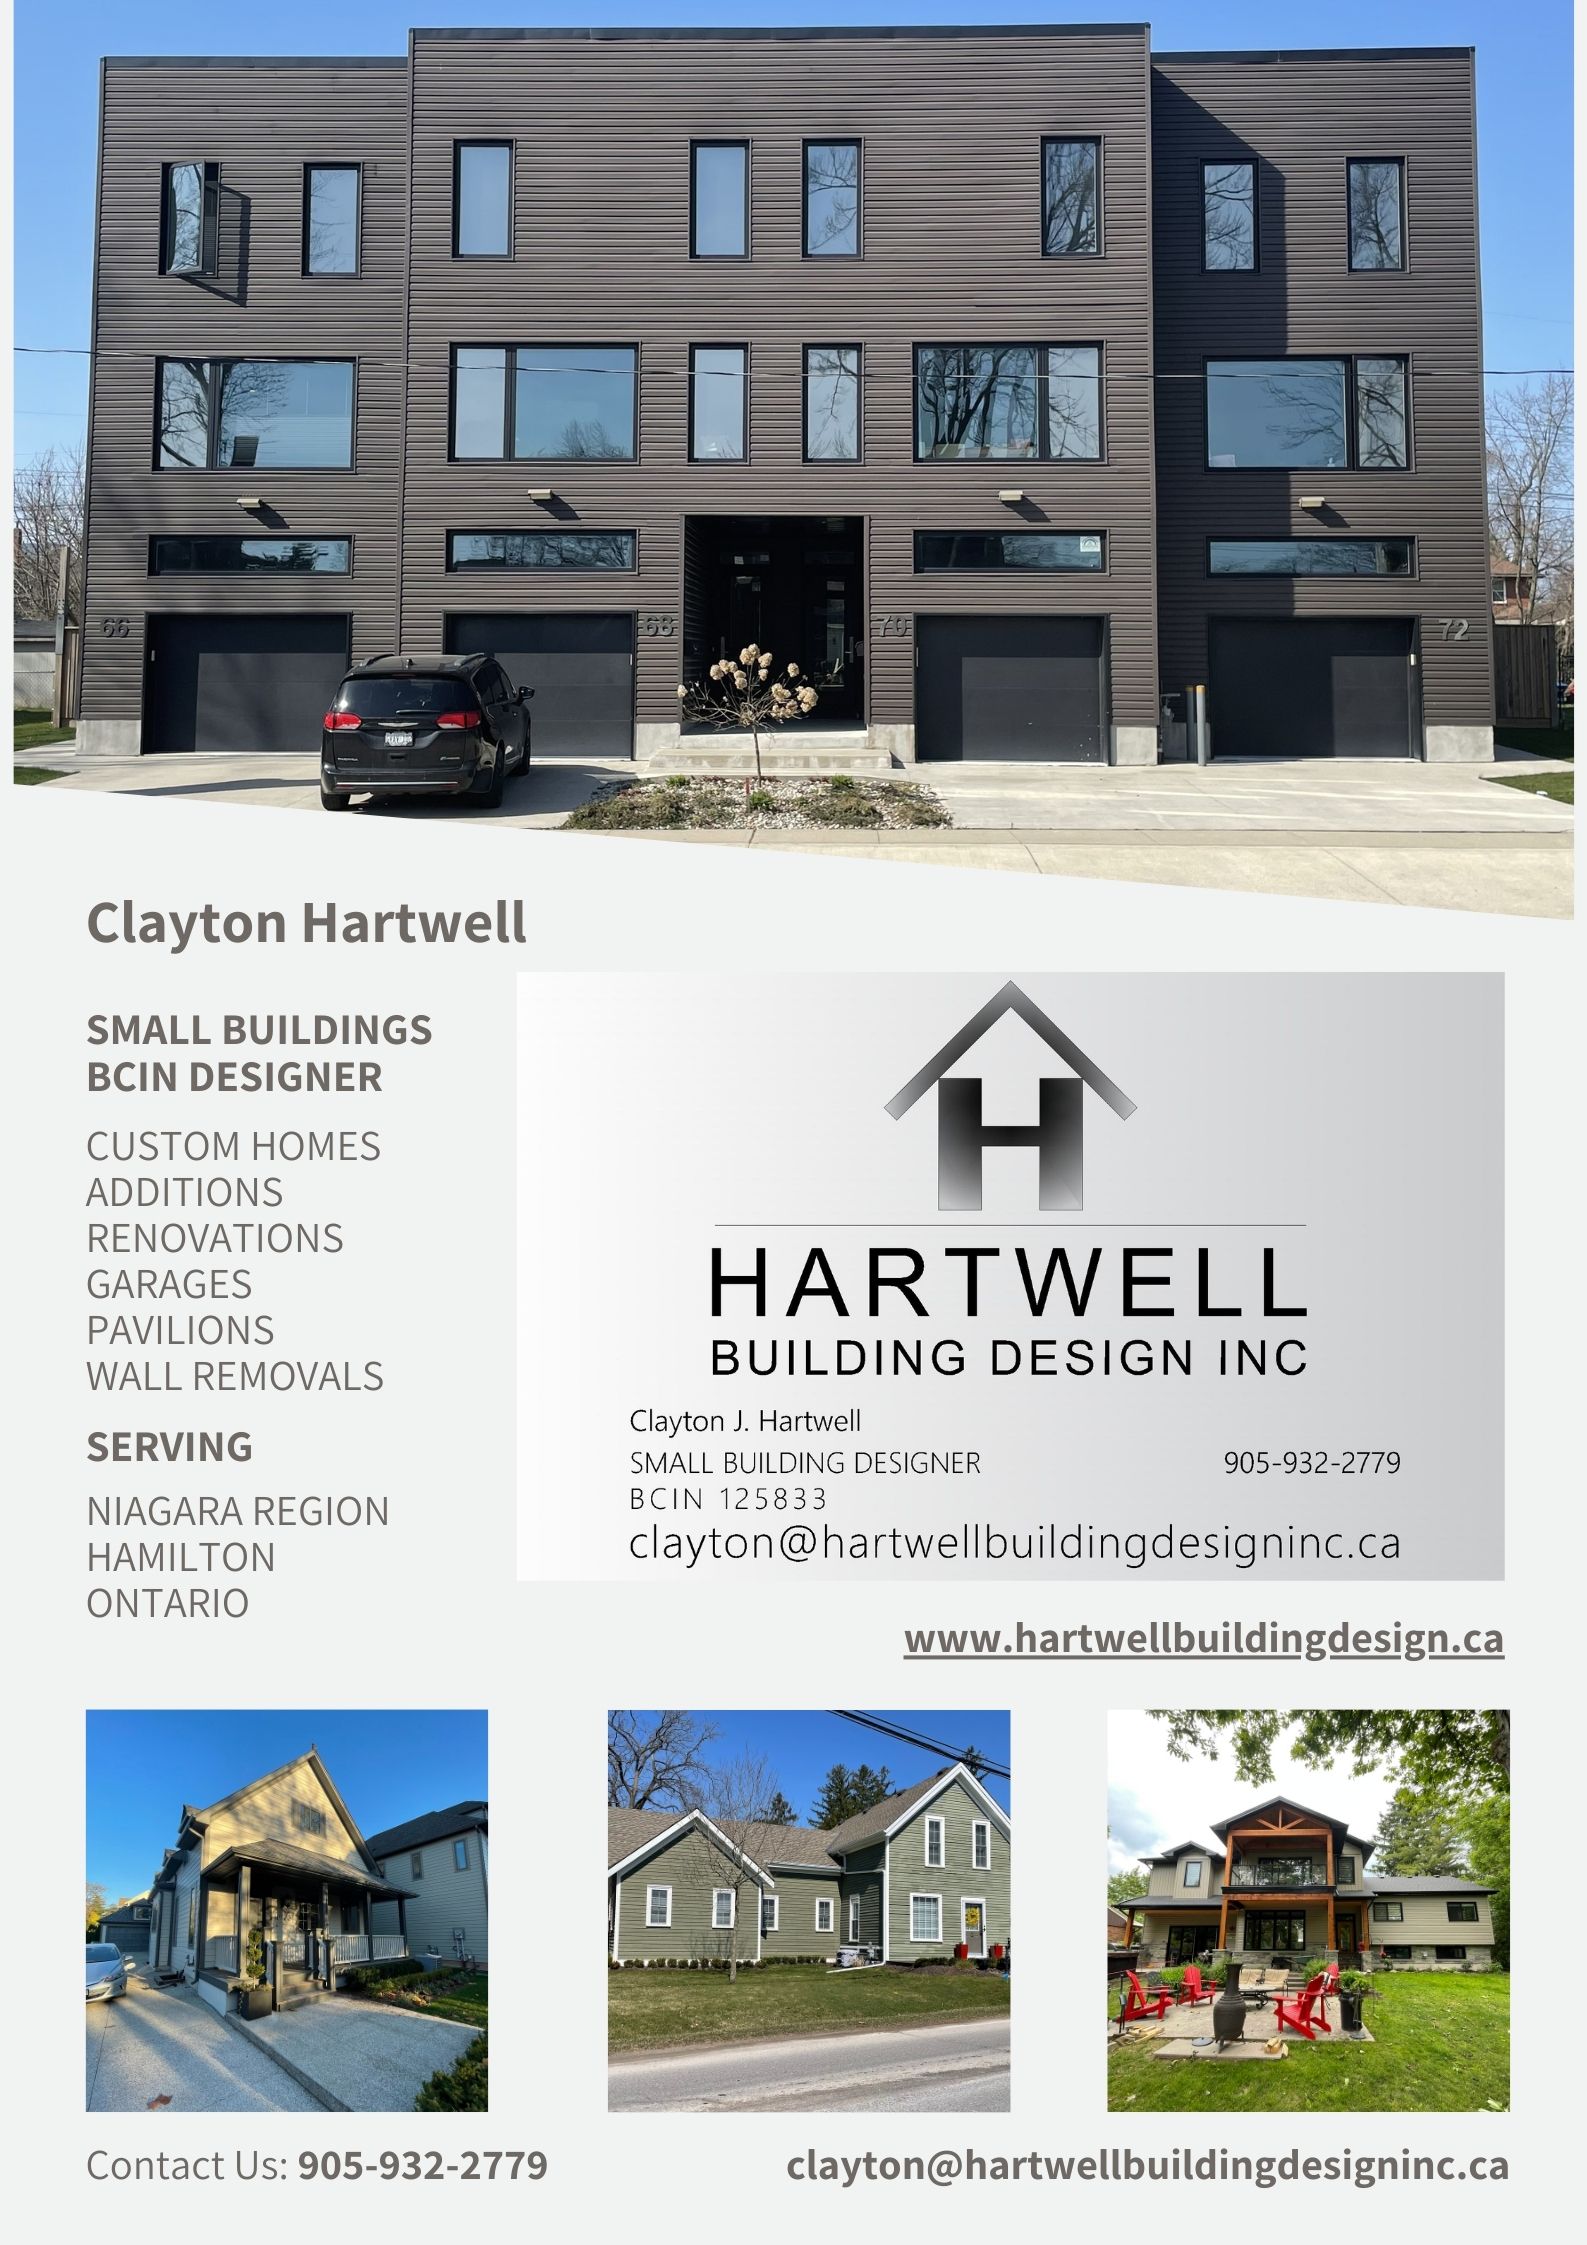 Hartwell Building Design